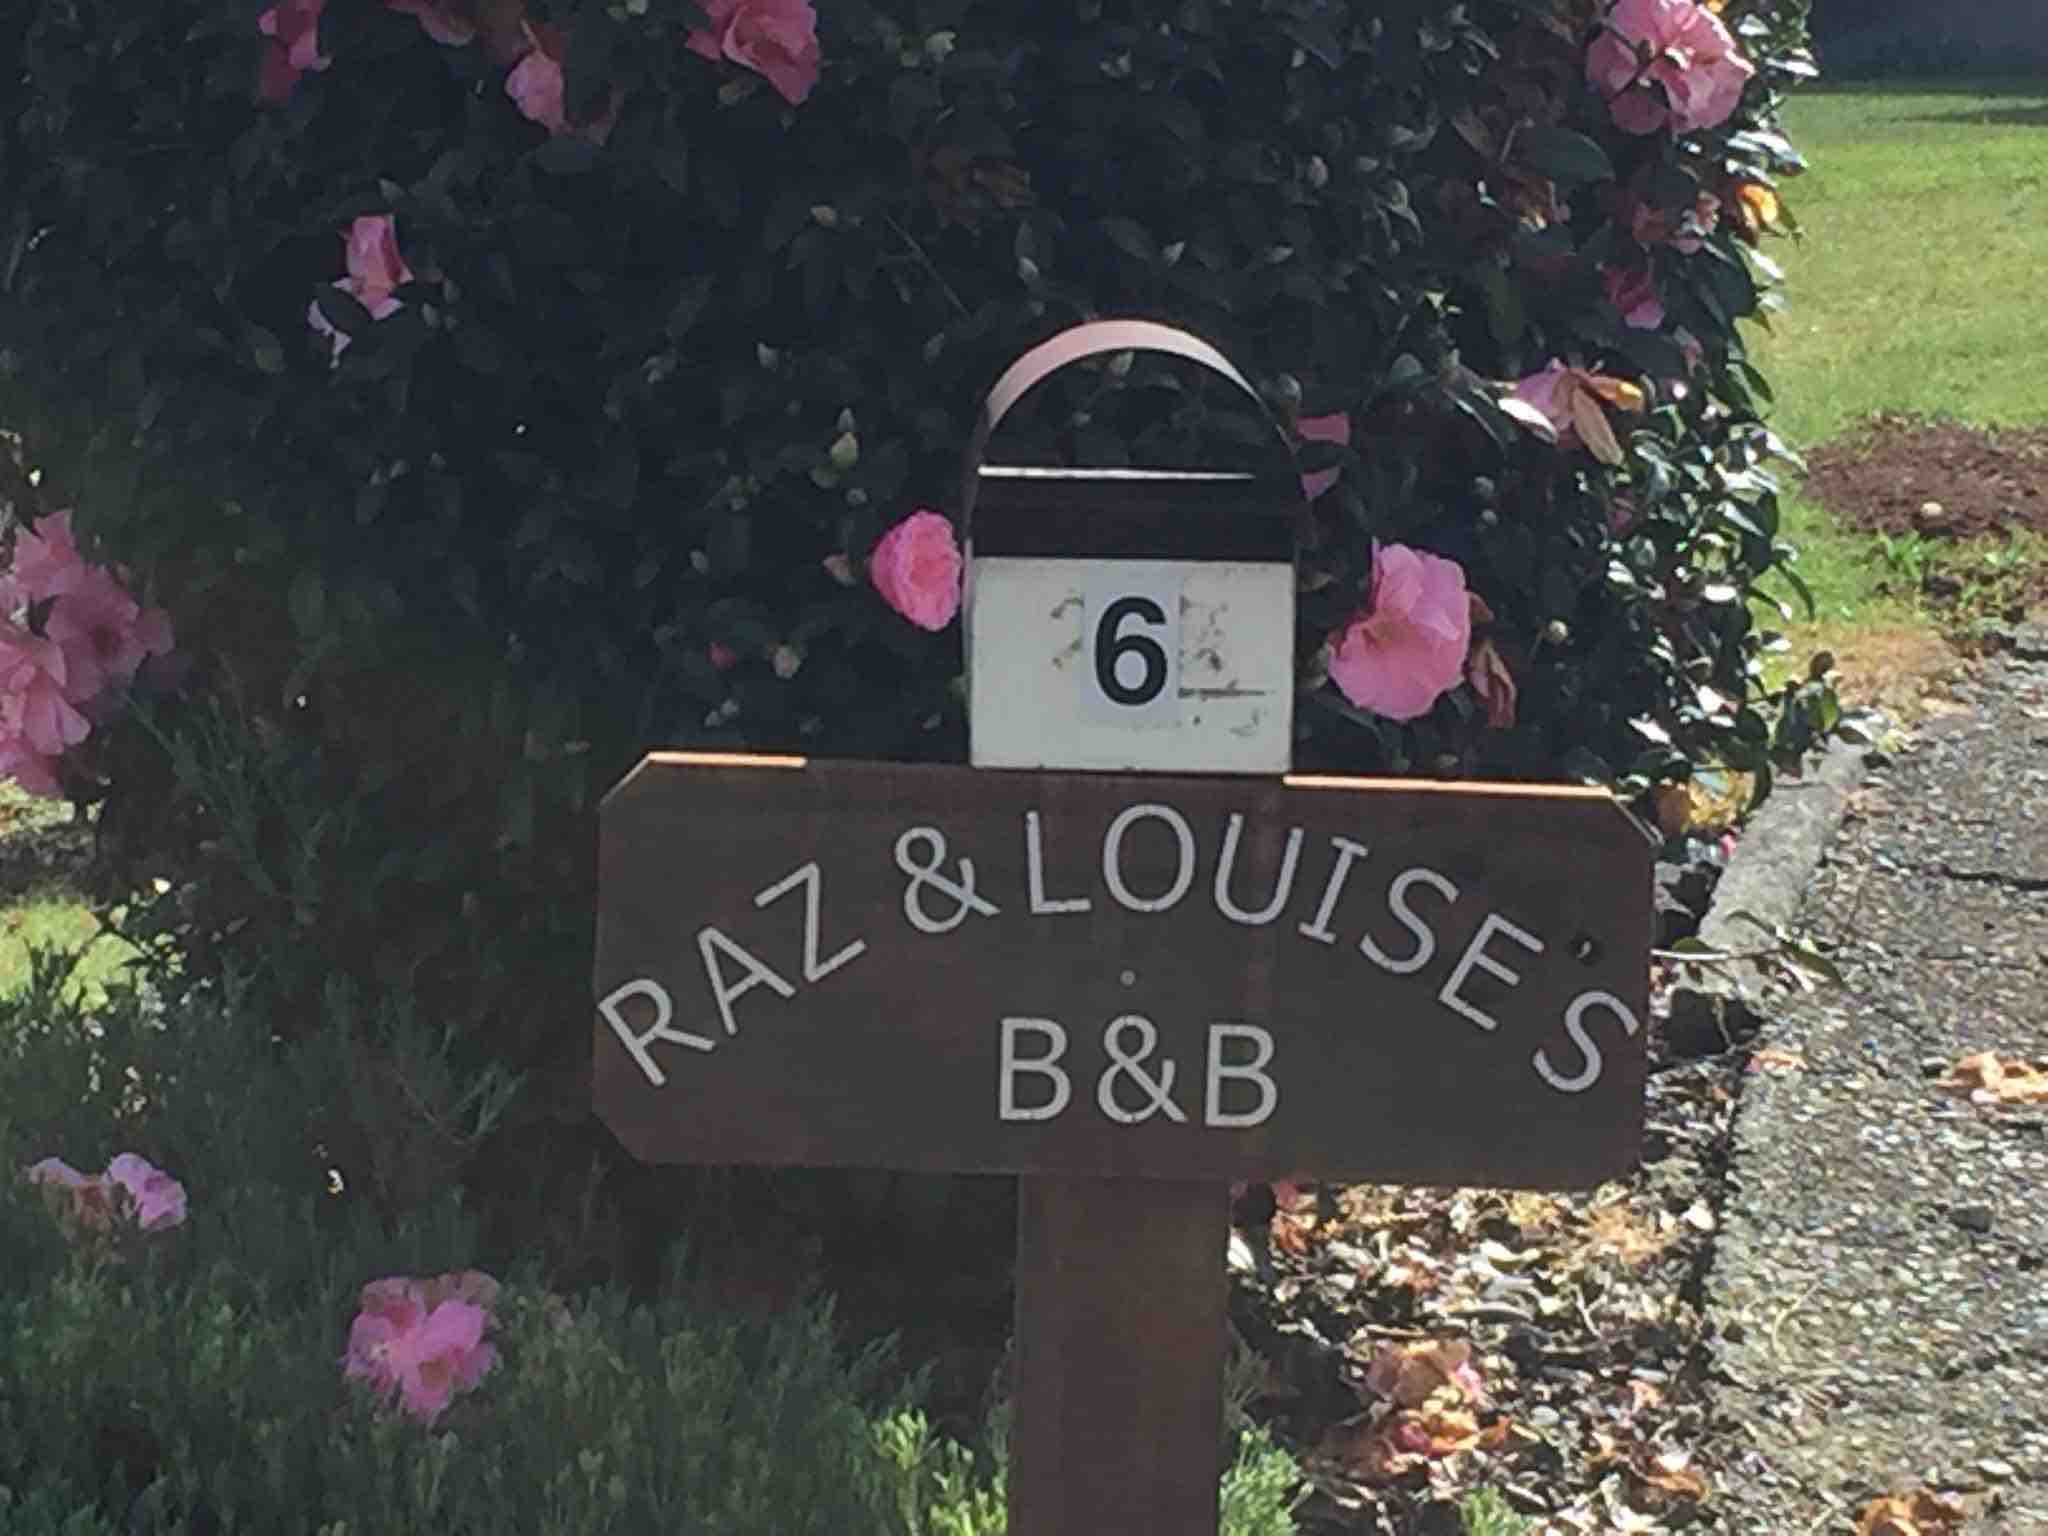 Raz and Louise's B&B